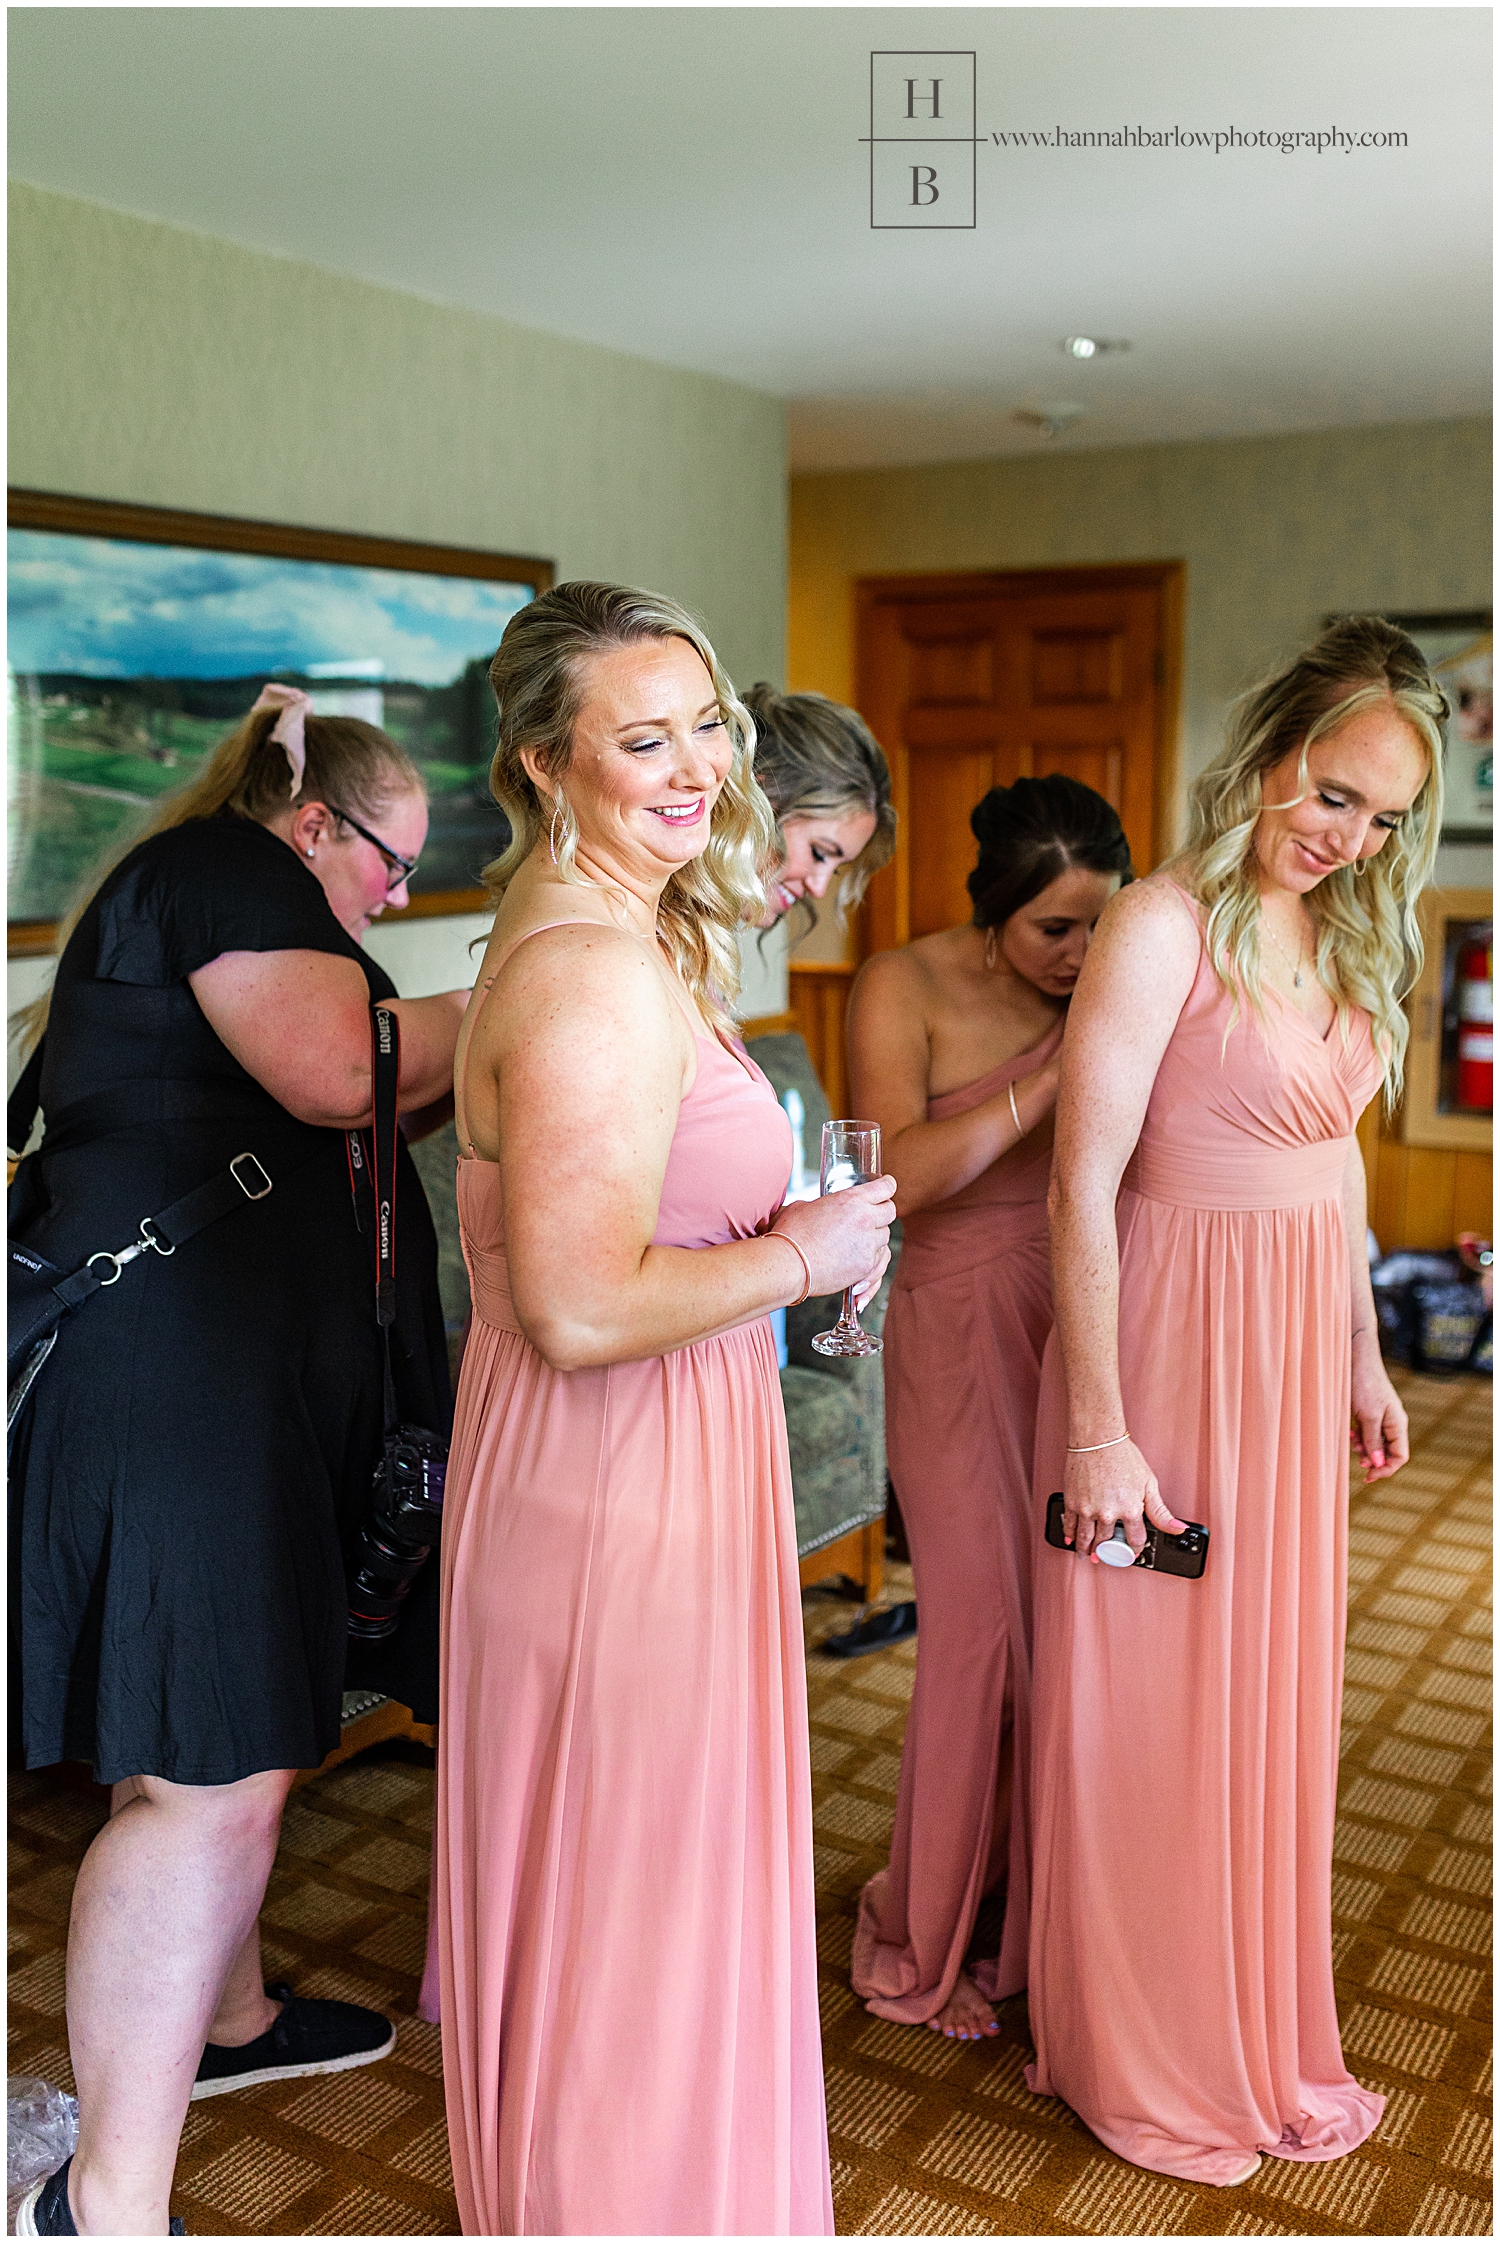 Wedding photographer assistant fixes dresses